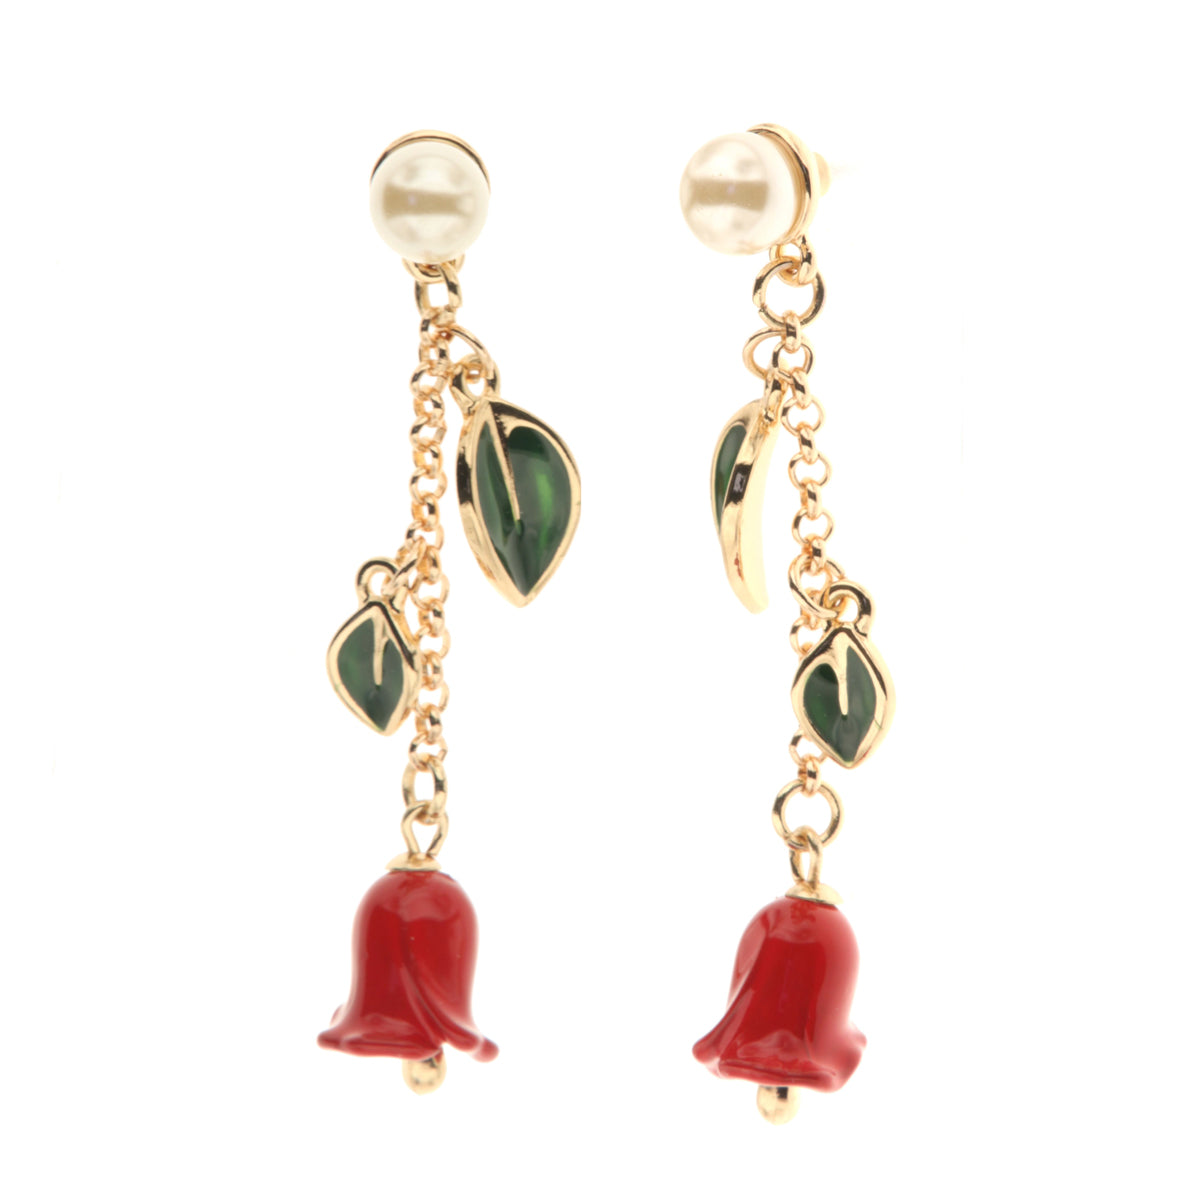 Metal earrings with lobe detail in Bainca pearl and rose -shaped pendant bells